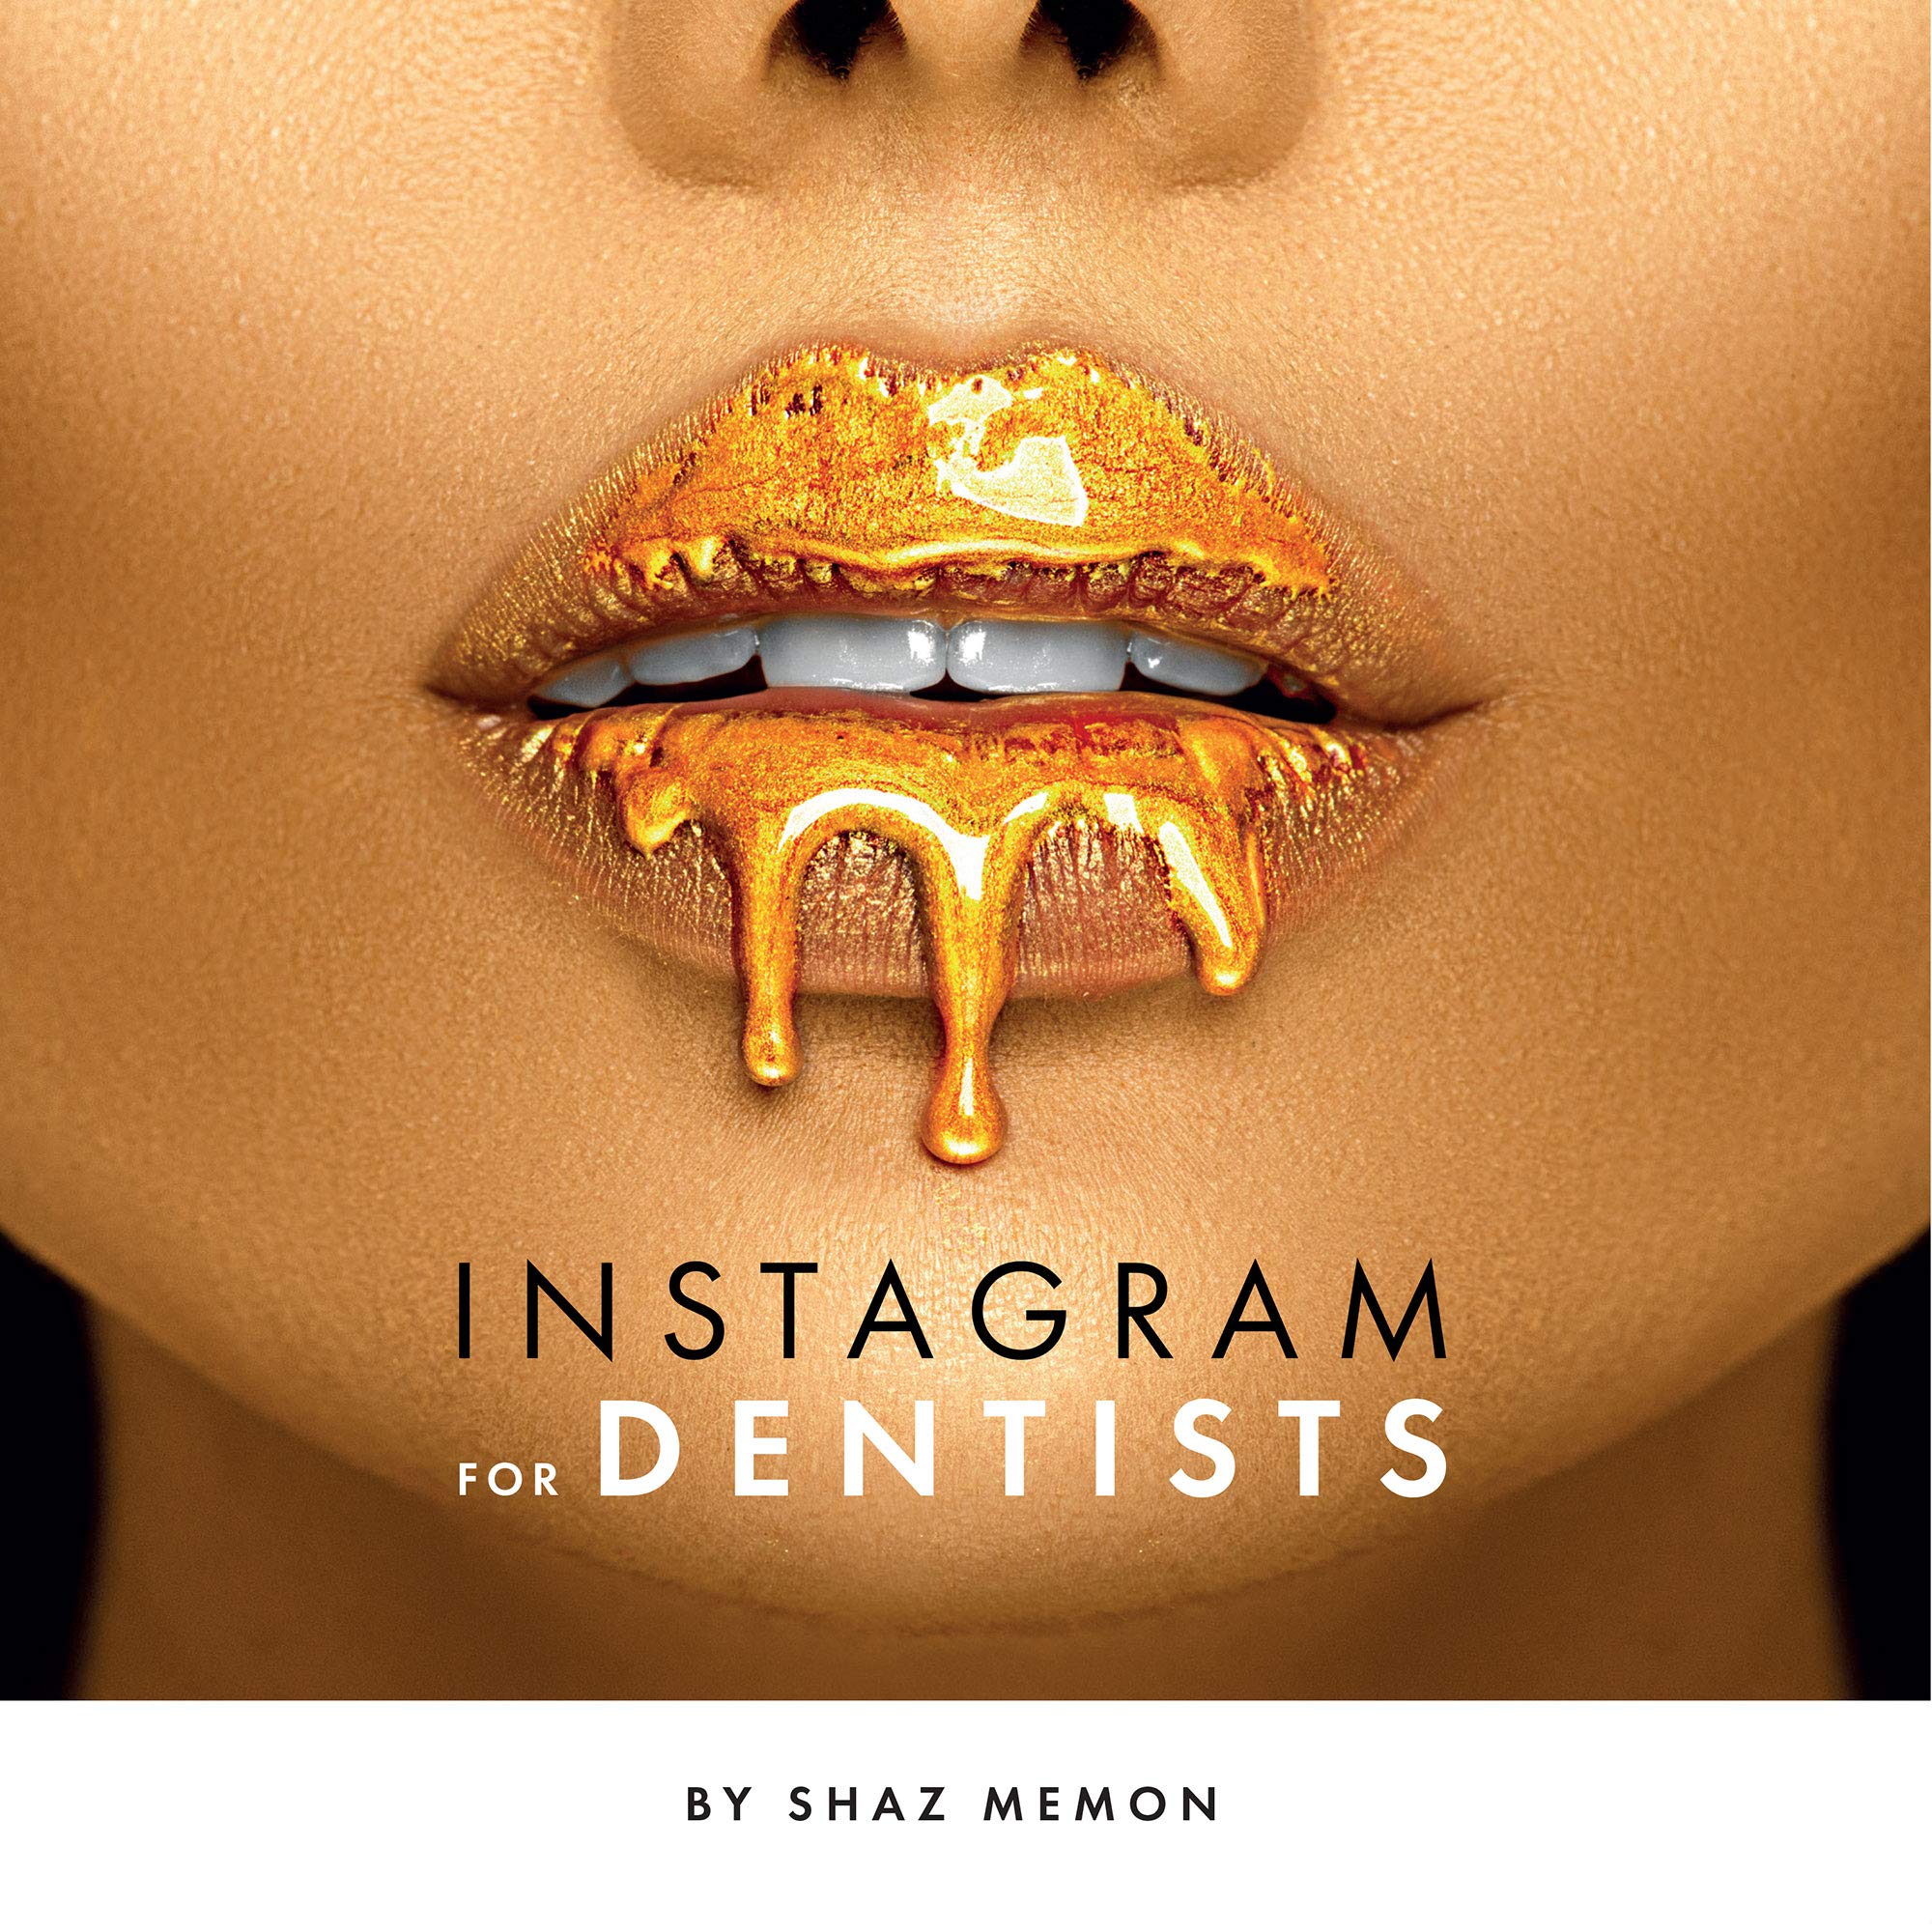 Instagram for dentists by Shaz Memon